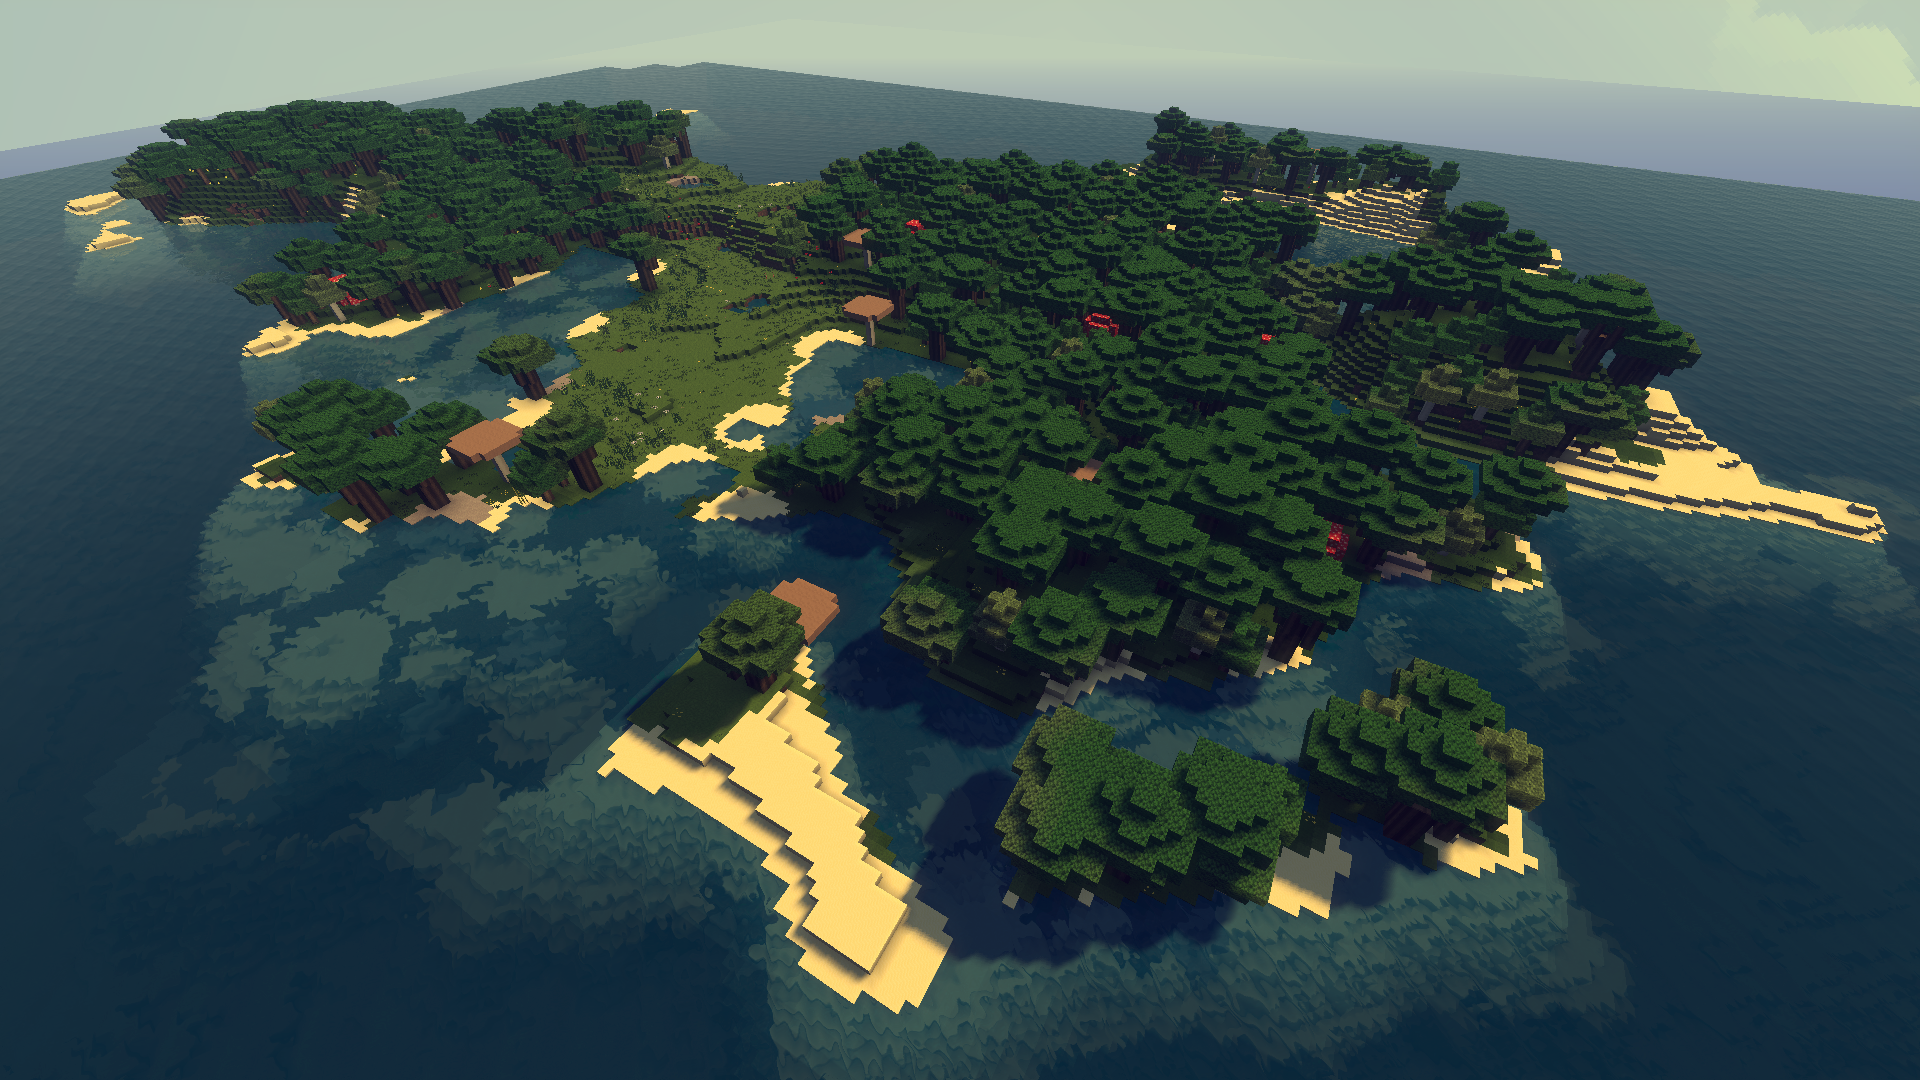 Dark Forest Island seed - Seeds - Minecraft: Java Edition 